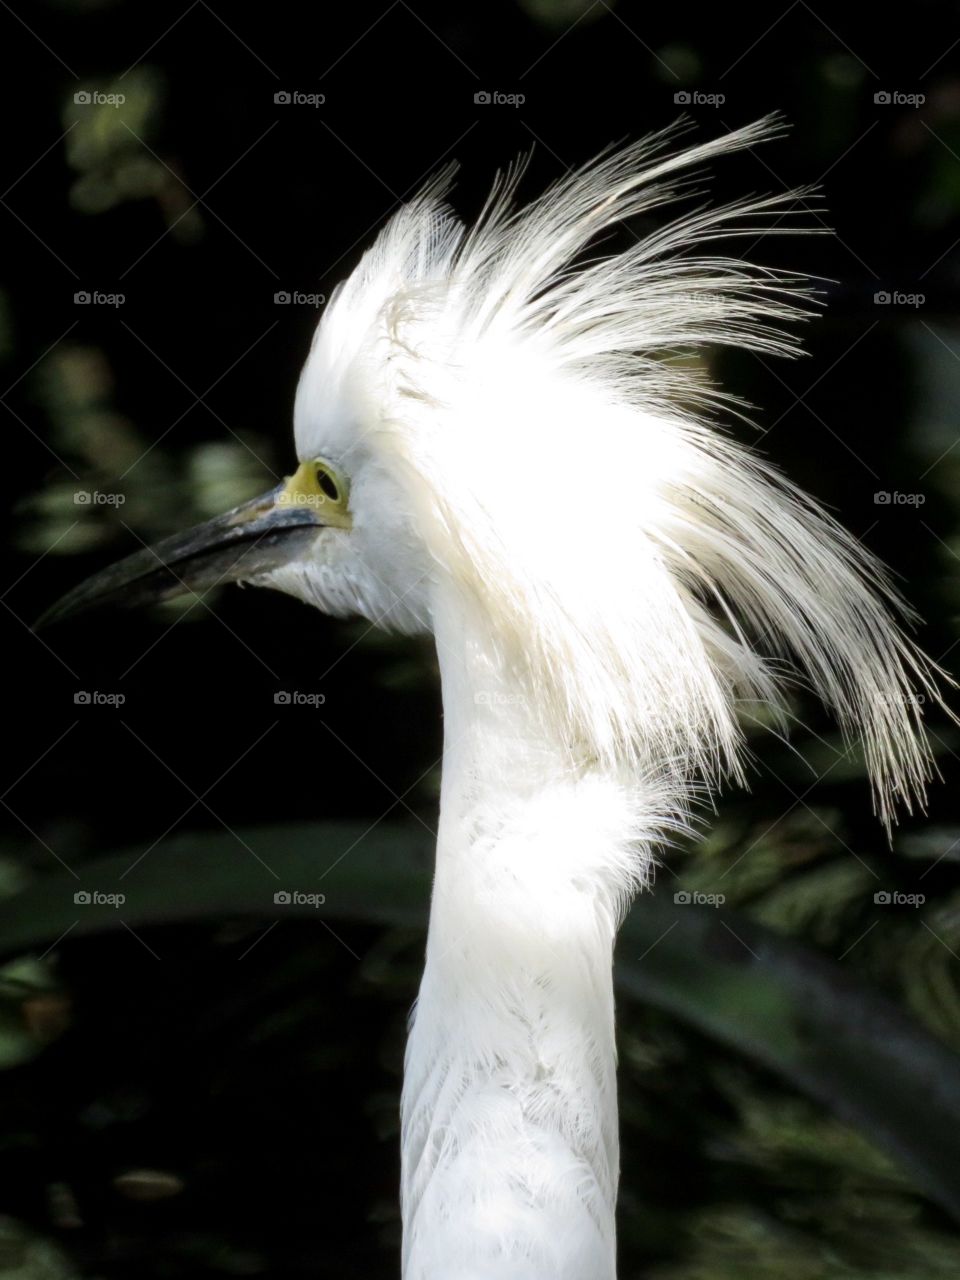 Snowy Egret 